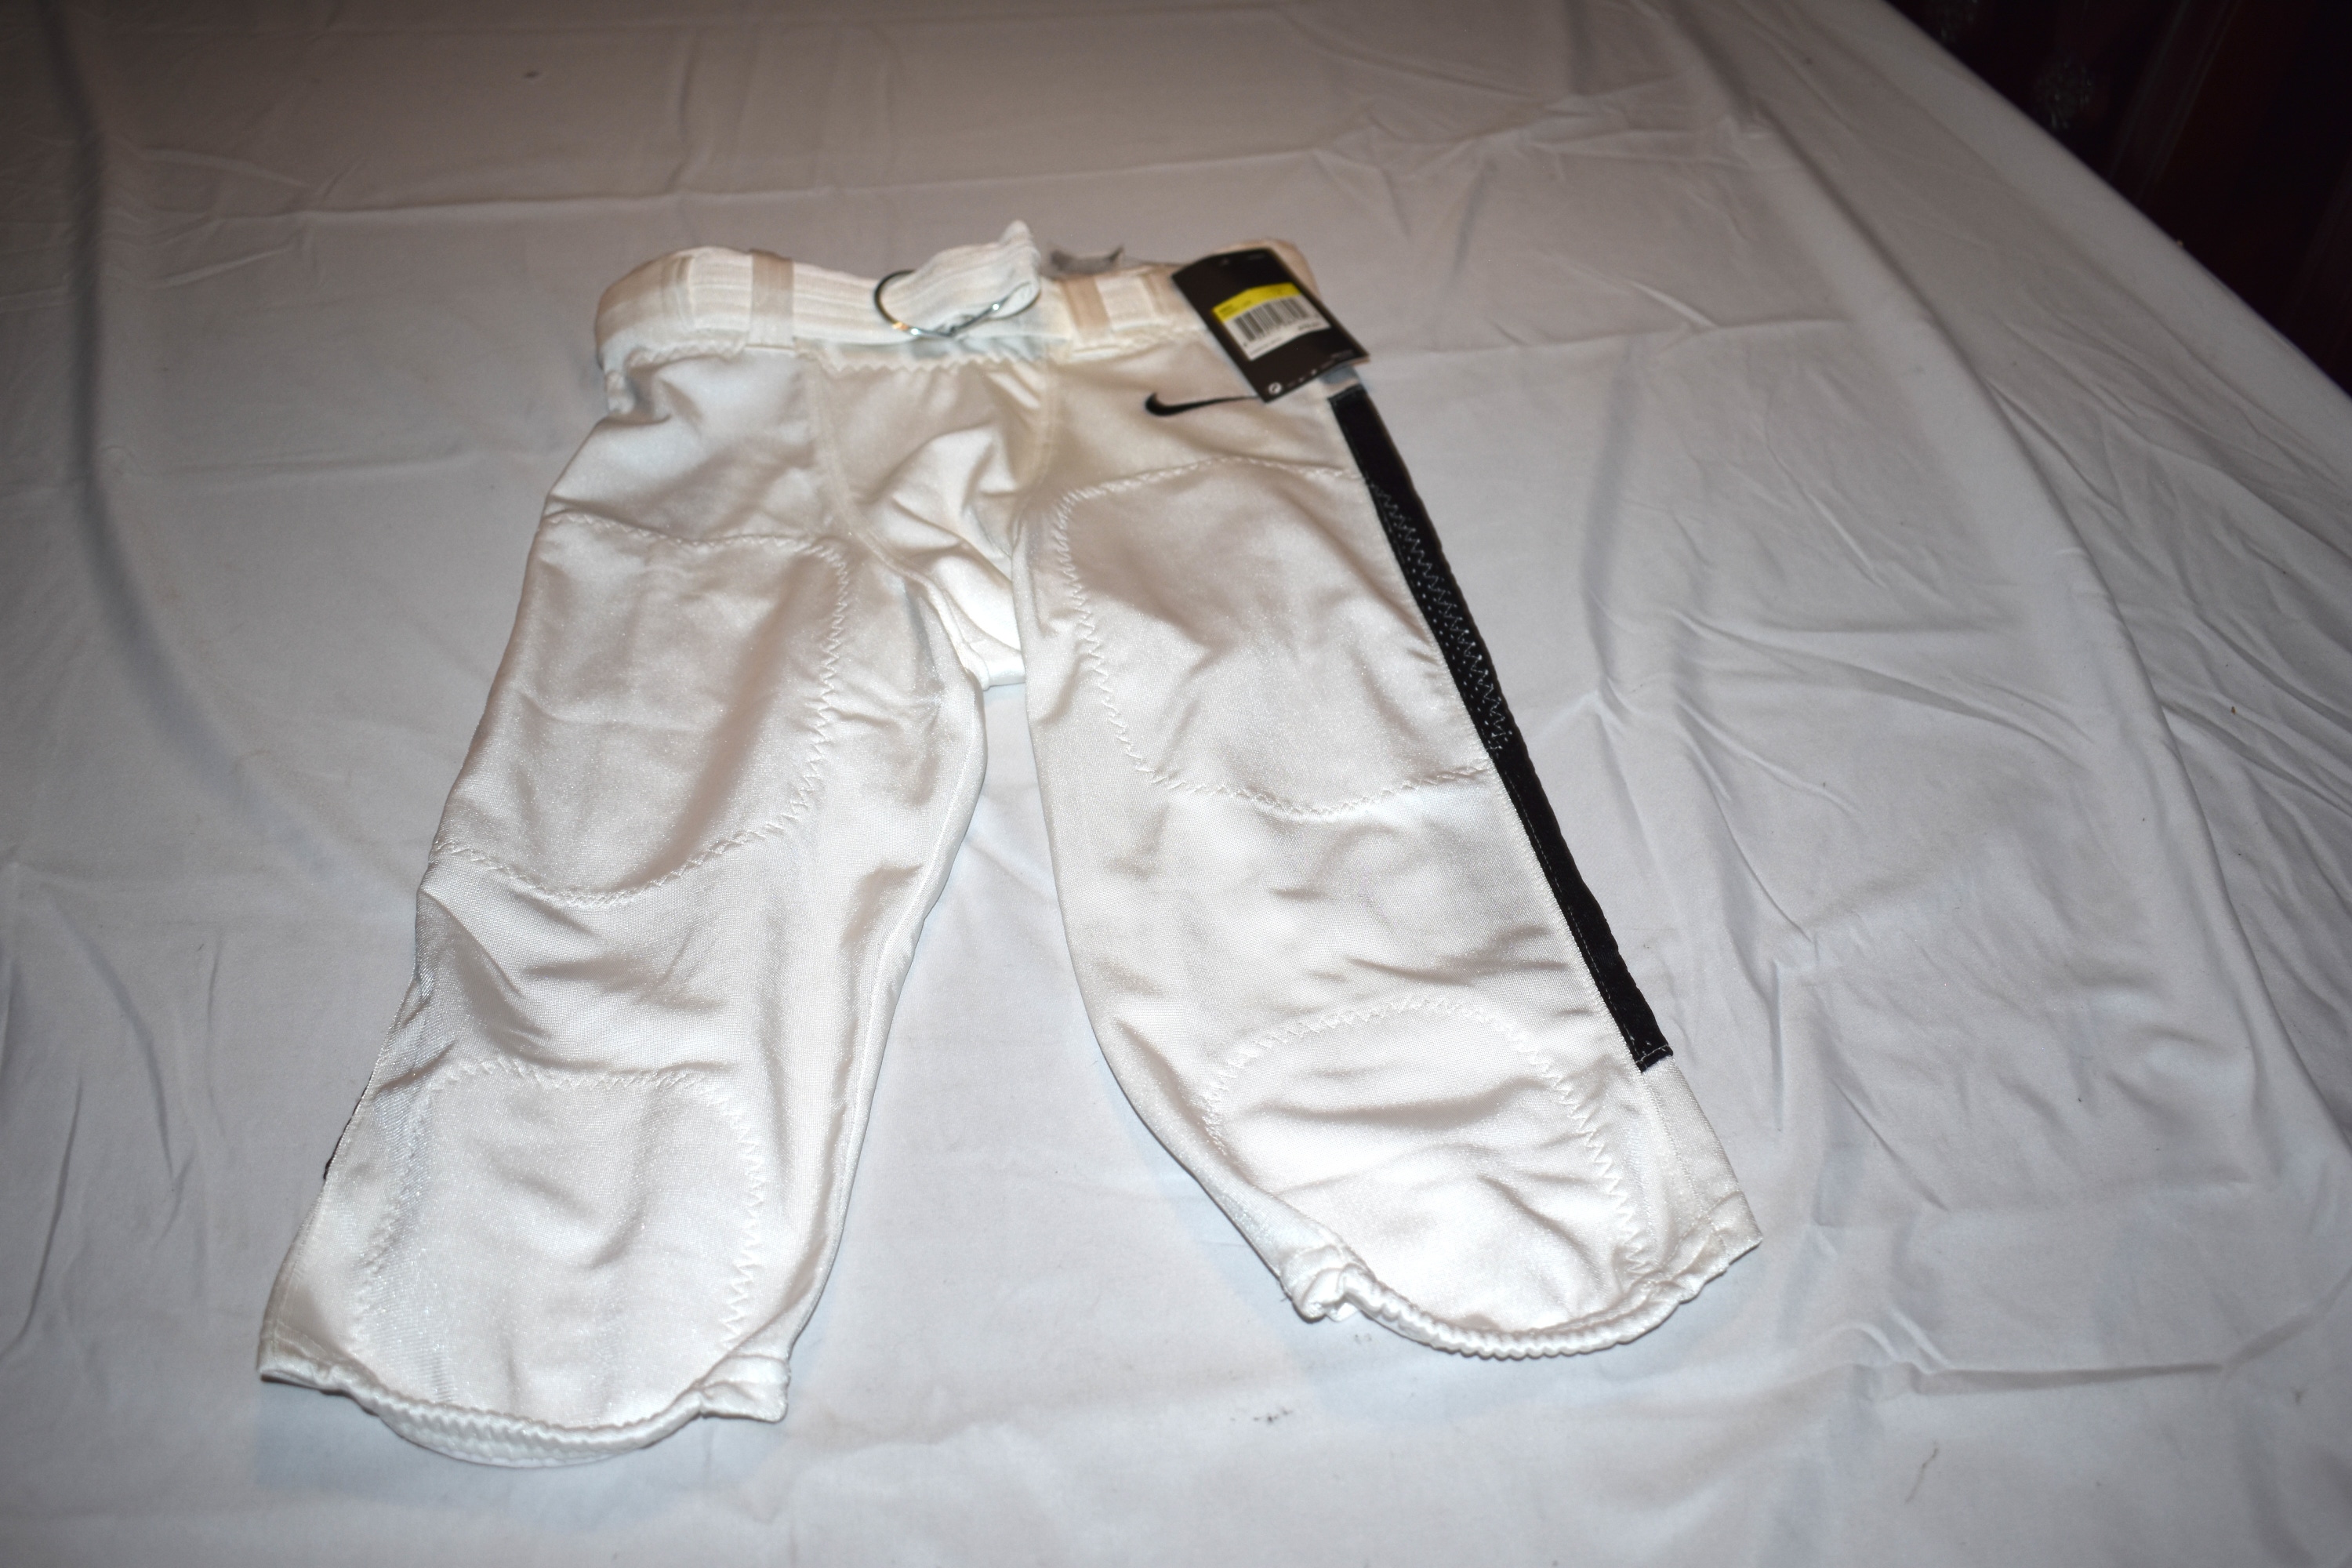 NEW - Nike Vapor Vented Performance Football Pants, White/Black, Small - NWT